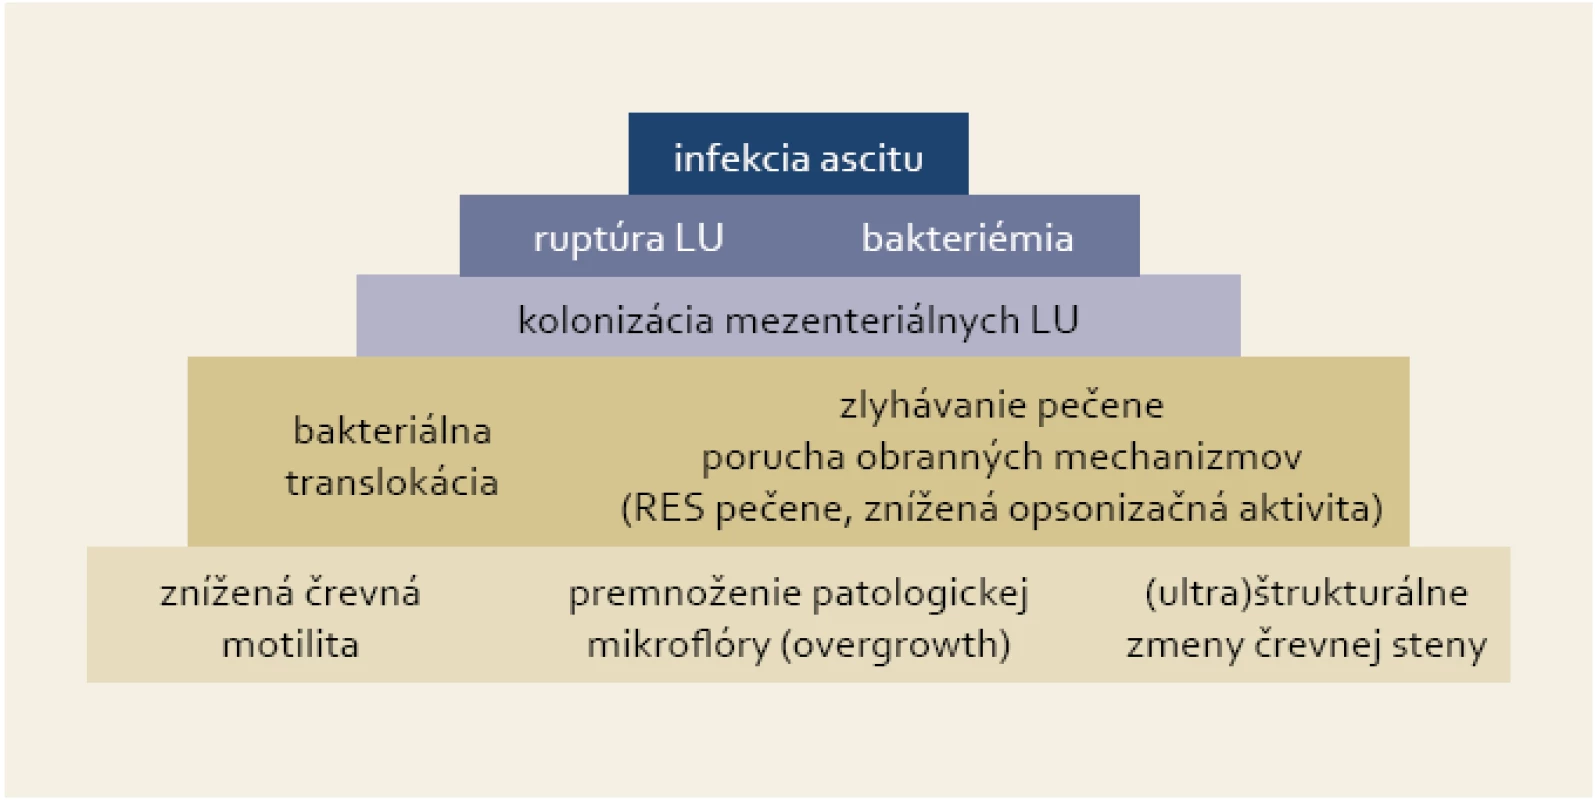 Pyramída dejov vedúcich k infekcii ascitu v prípade SBP.
Fig. 1. Pyramid of events resulting in ascites infection in the case of SBP.